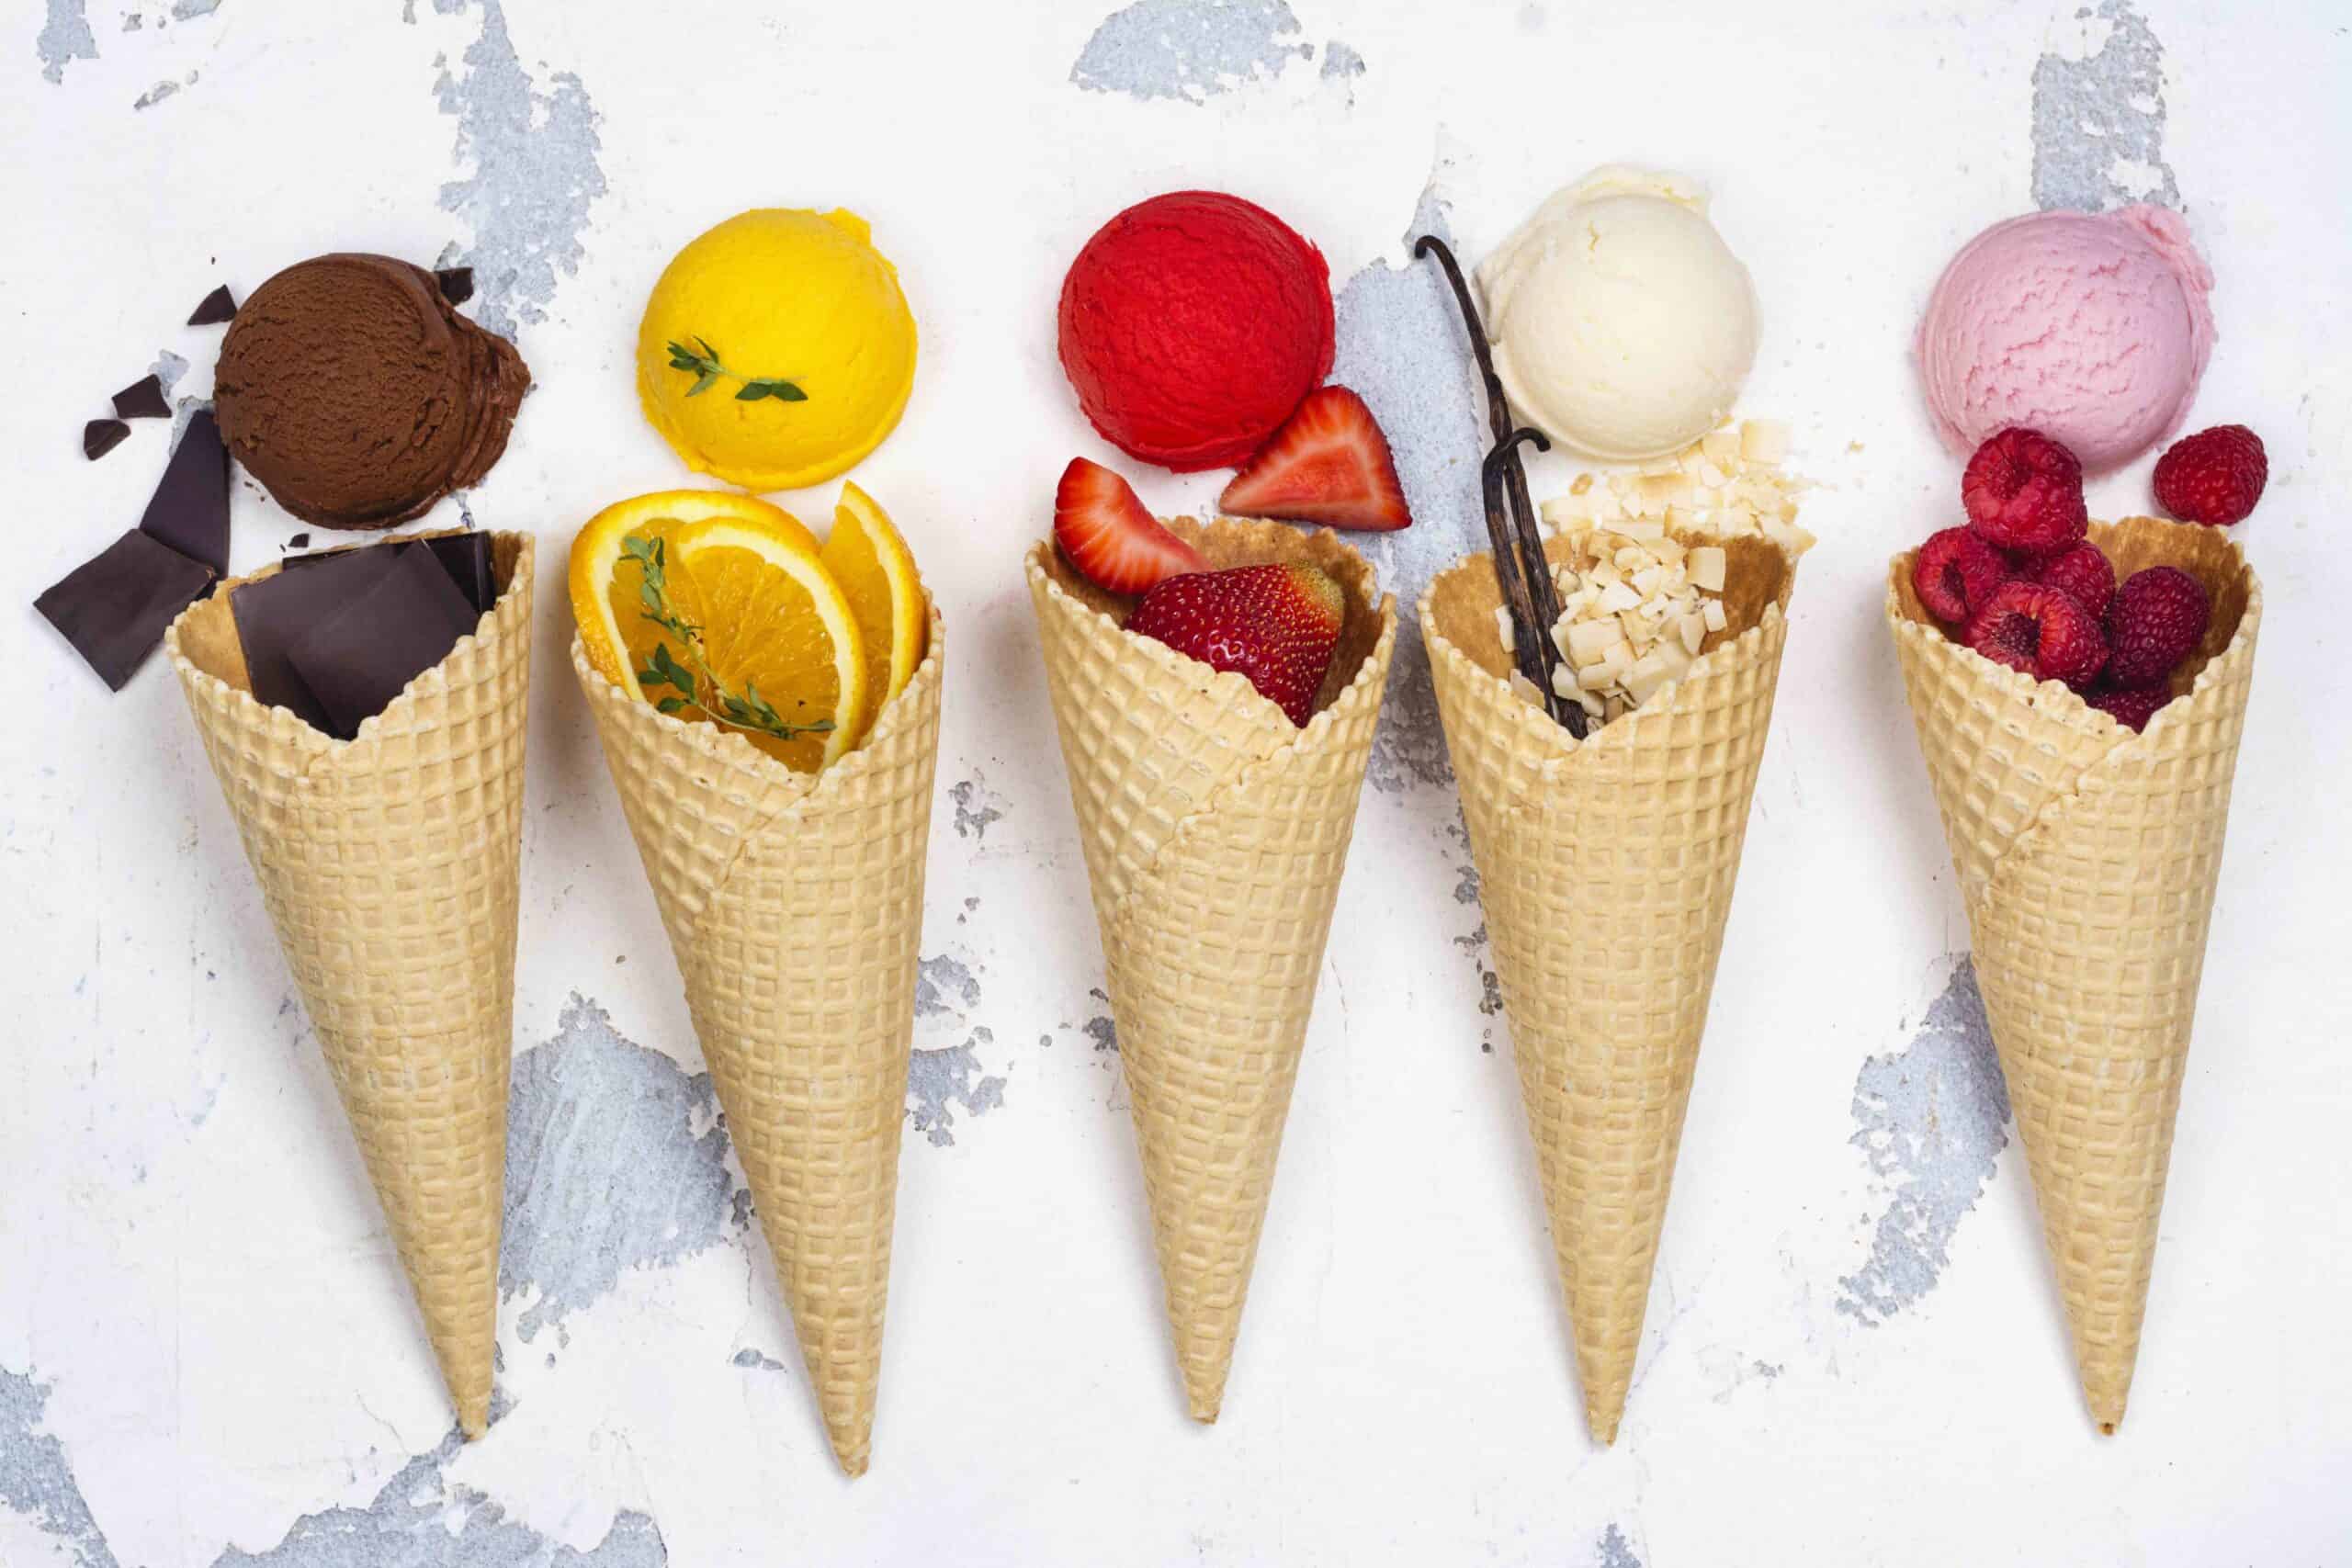 Assortment of ice cream flavors, waffle cones and ingredients on white background. Chocolate, orange, strawberry, vanilla and raspberry ice cream